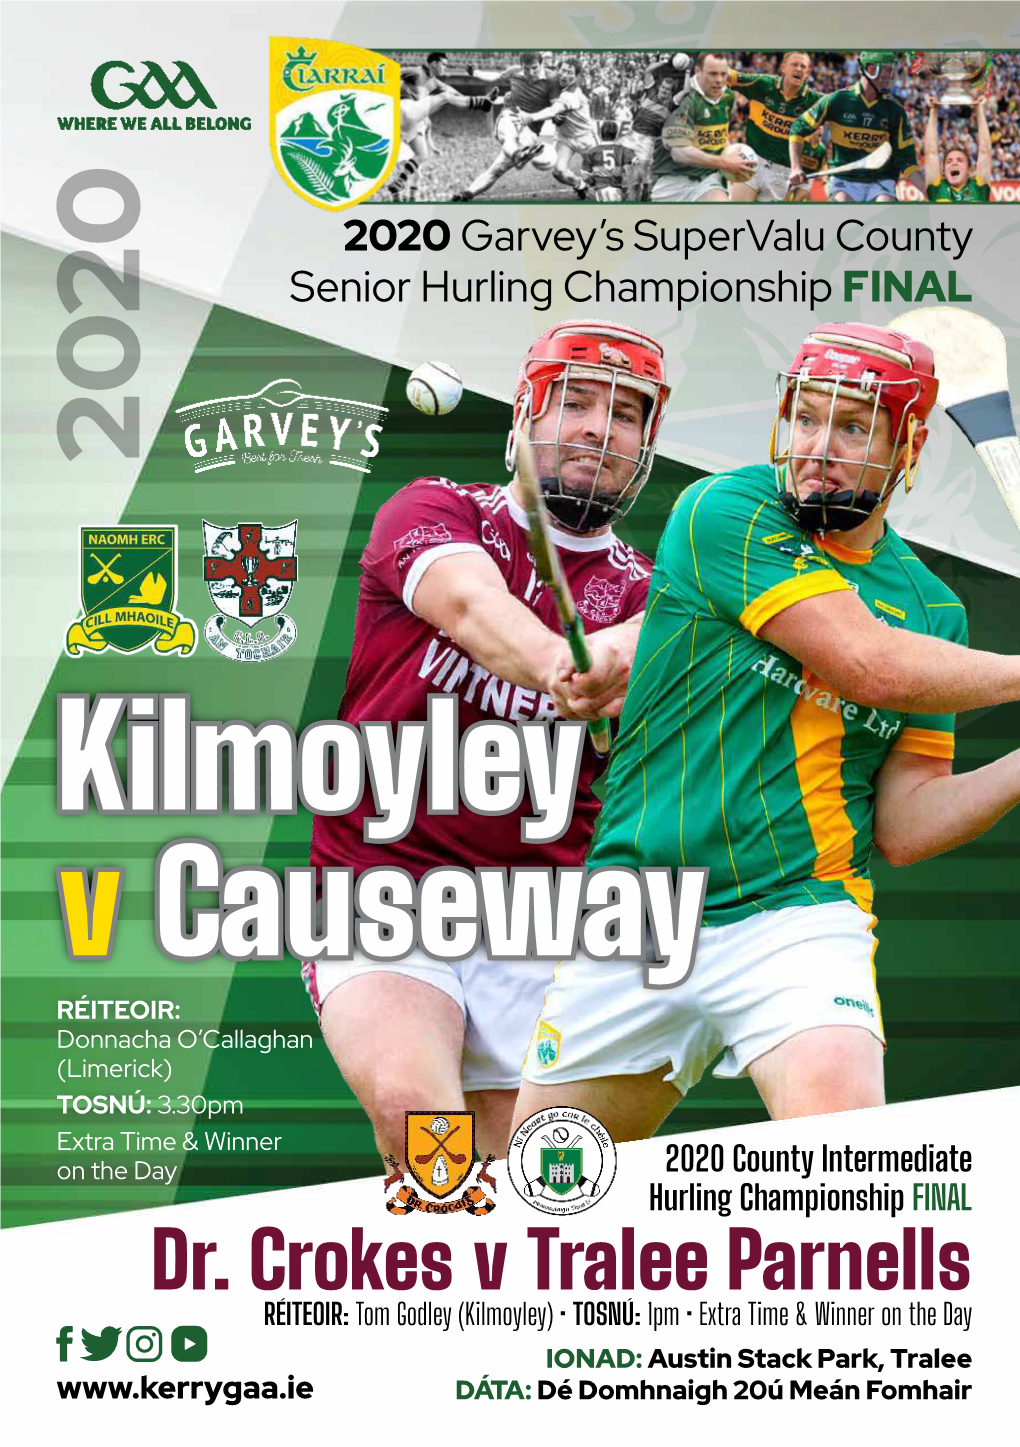 Kilmoyley V Causeway RÉITEOIR: Donnacha O’Callaghan (Limerick) TOSNÚ: 3.30Pm Extra Time & Winner on the Day 2020 County Intermediate Hurling Championship FINAL Dr